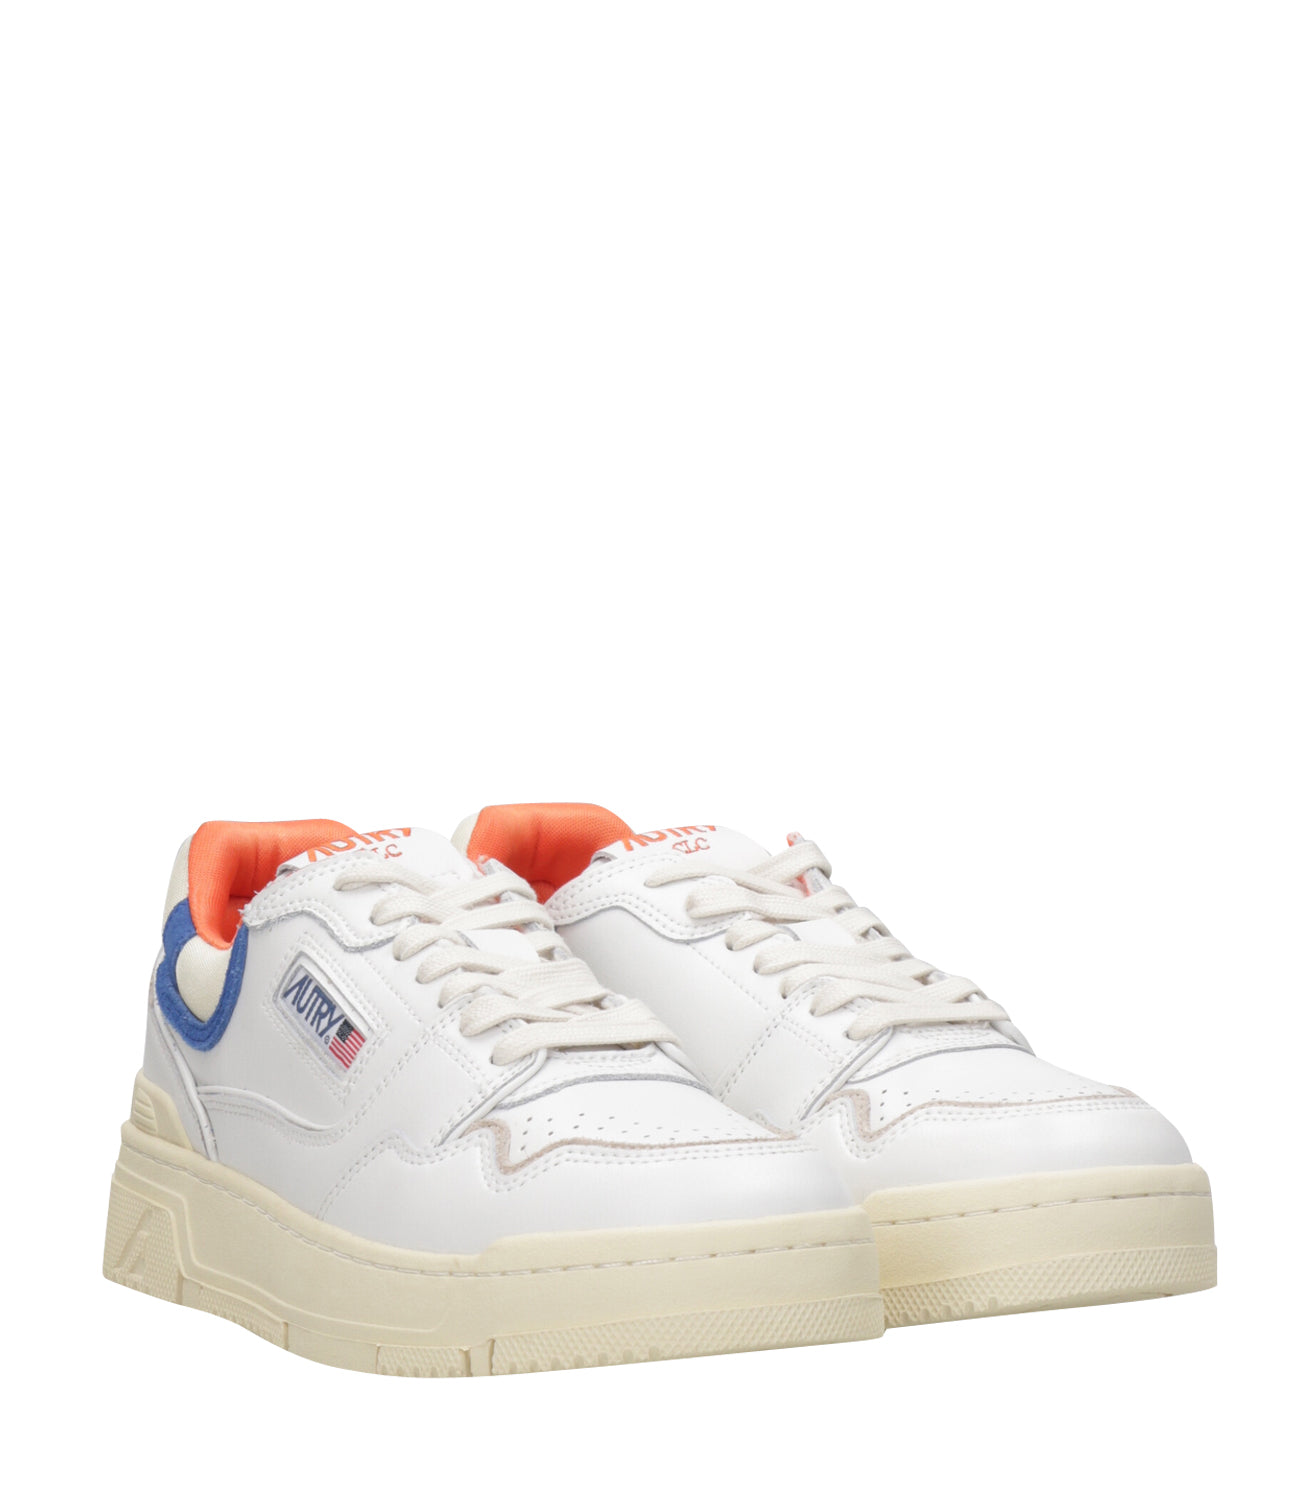 Autry | Sneakers Clc Bianco Arancio e Blu